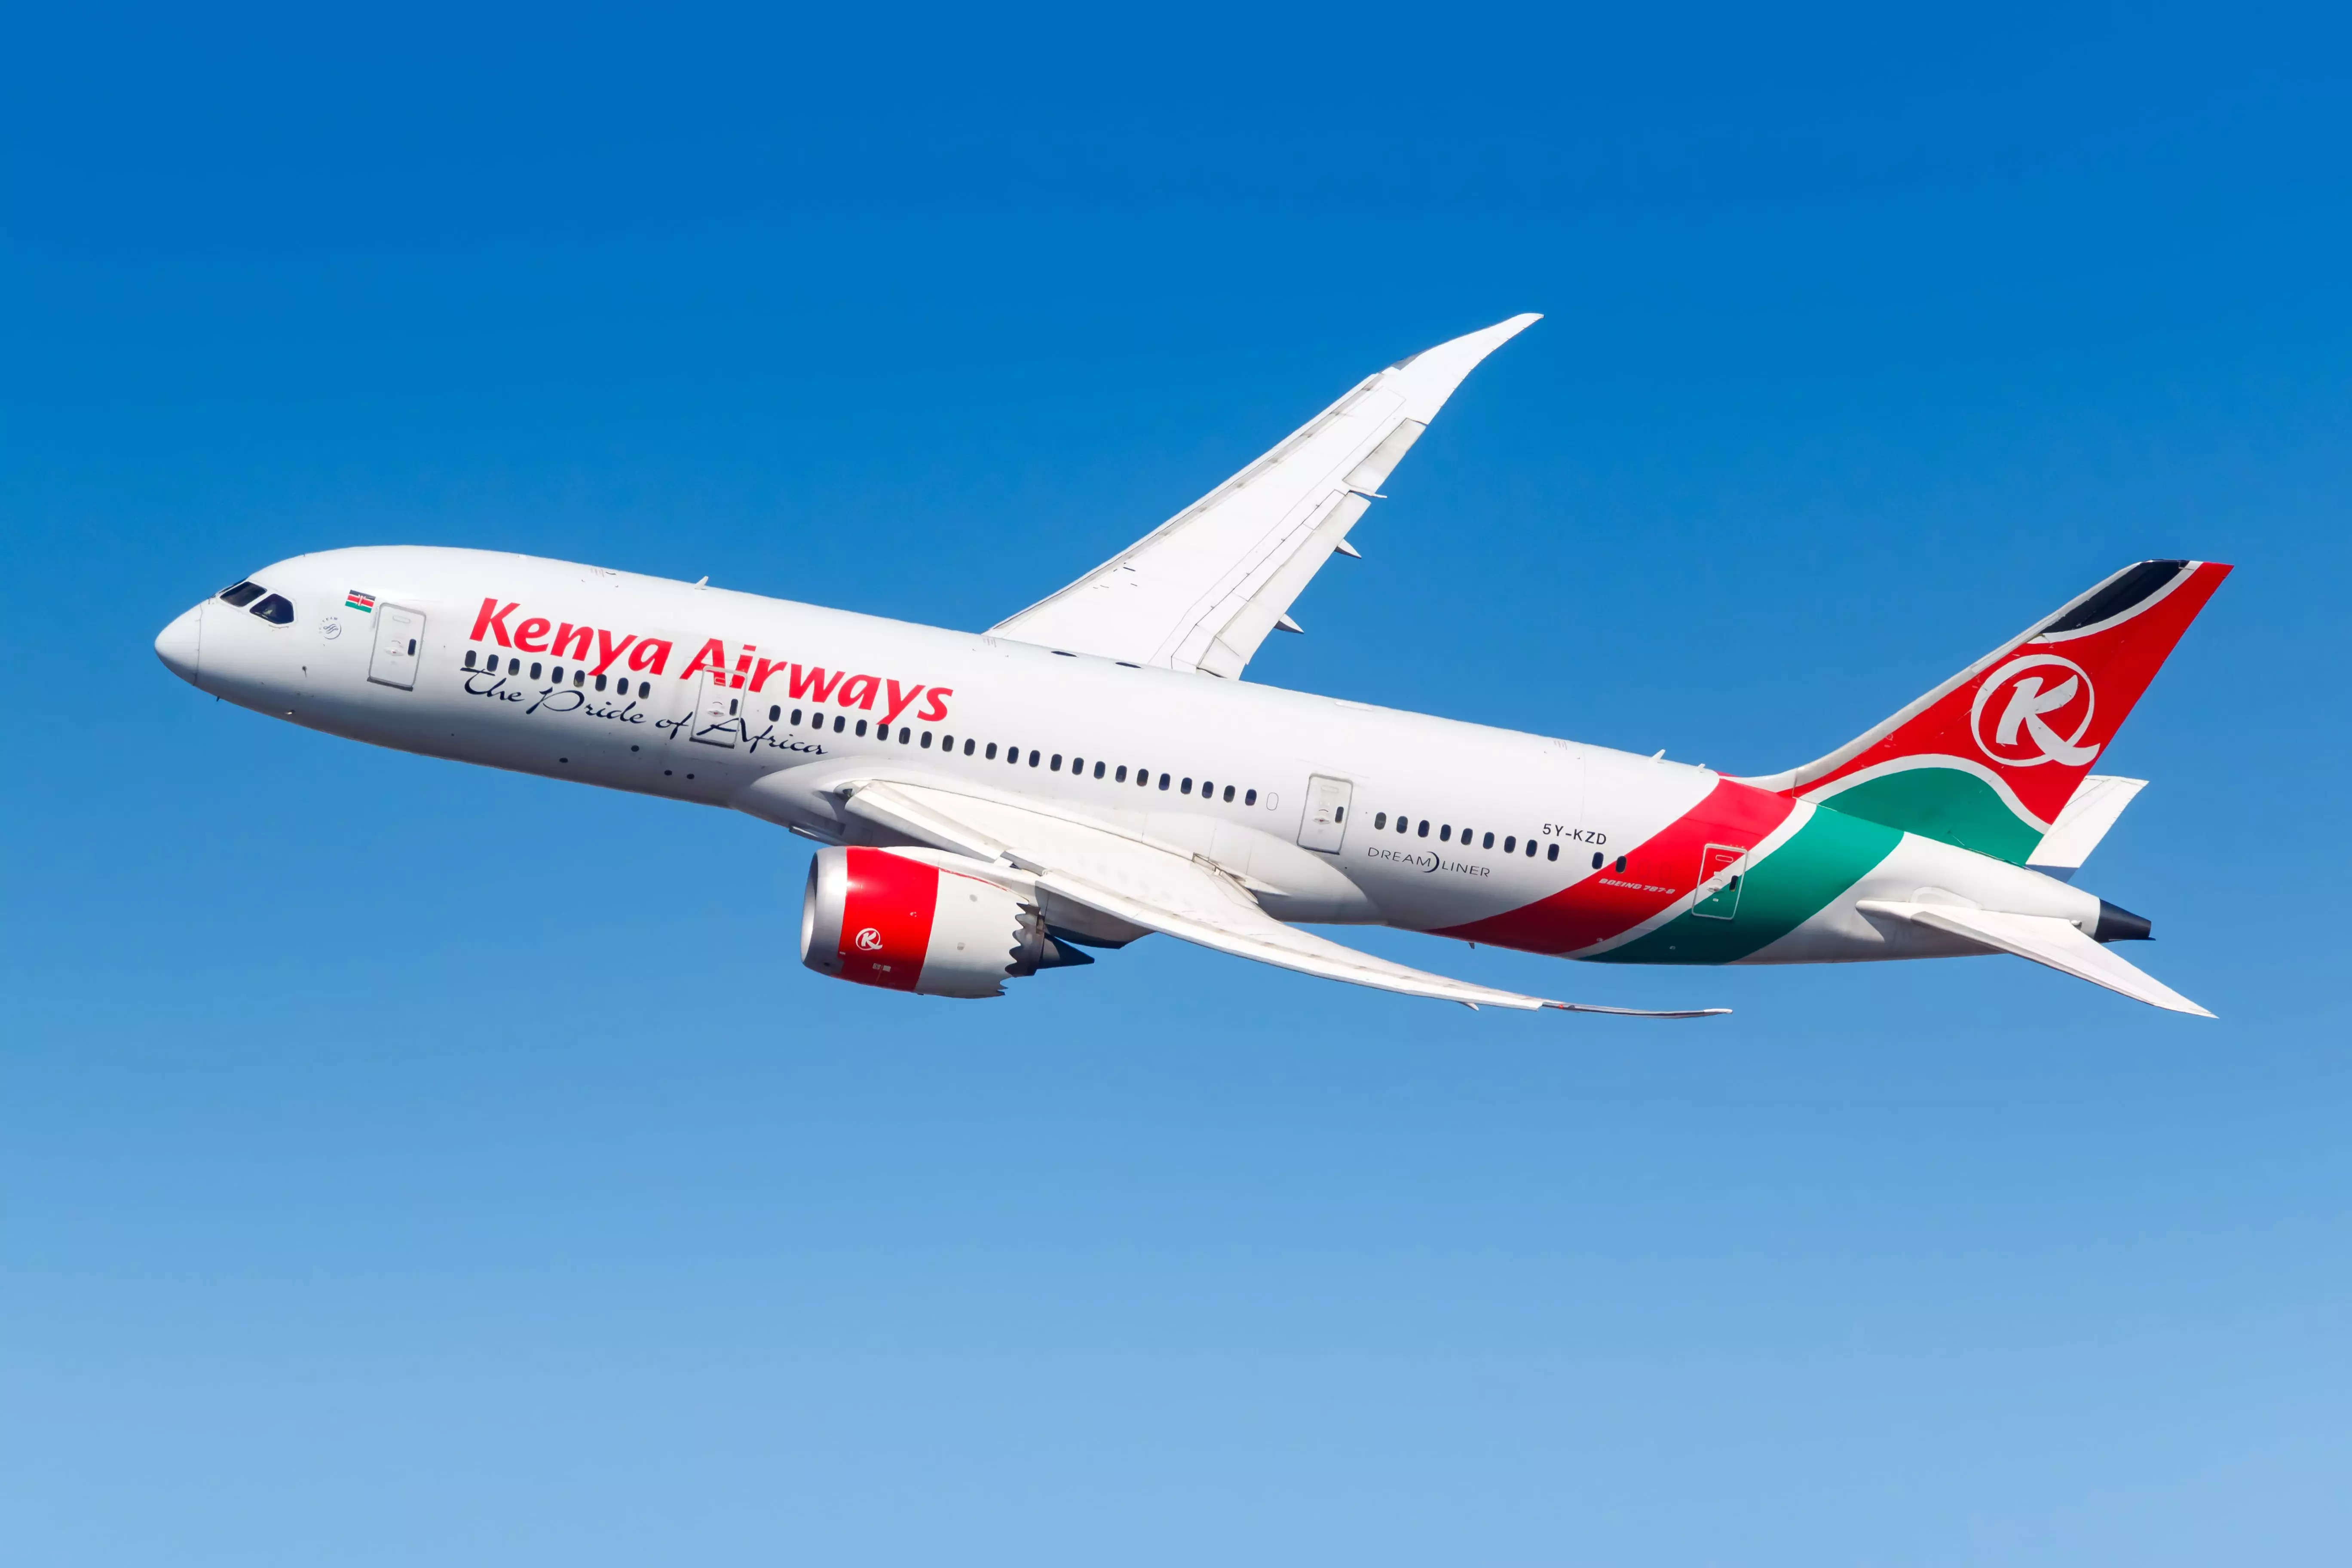 Kenya Airways reports narrowing pretax loss by 15% in first-half as borders reopen